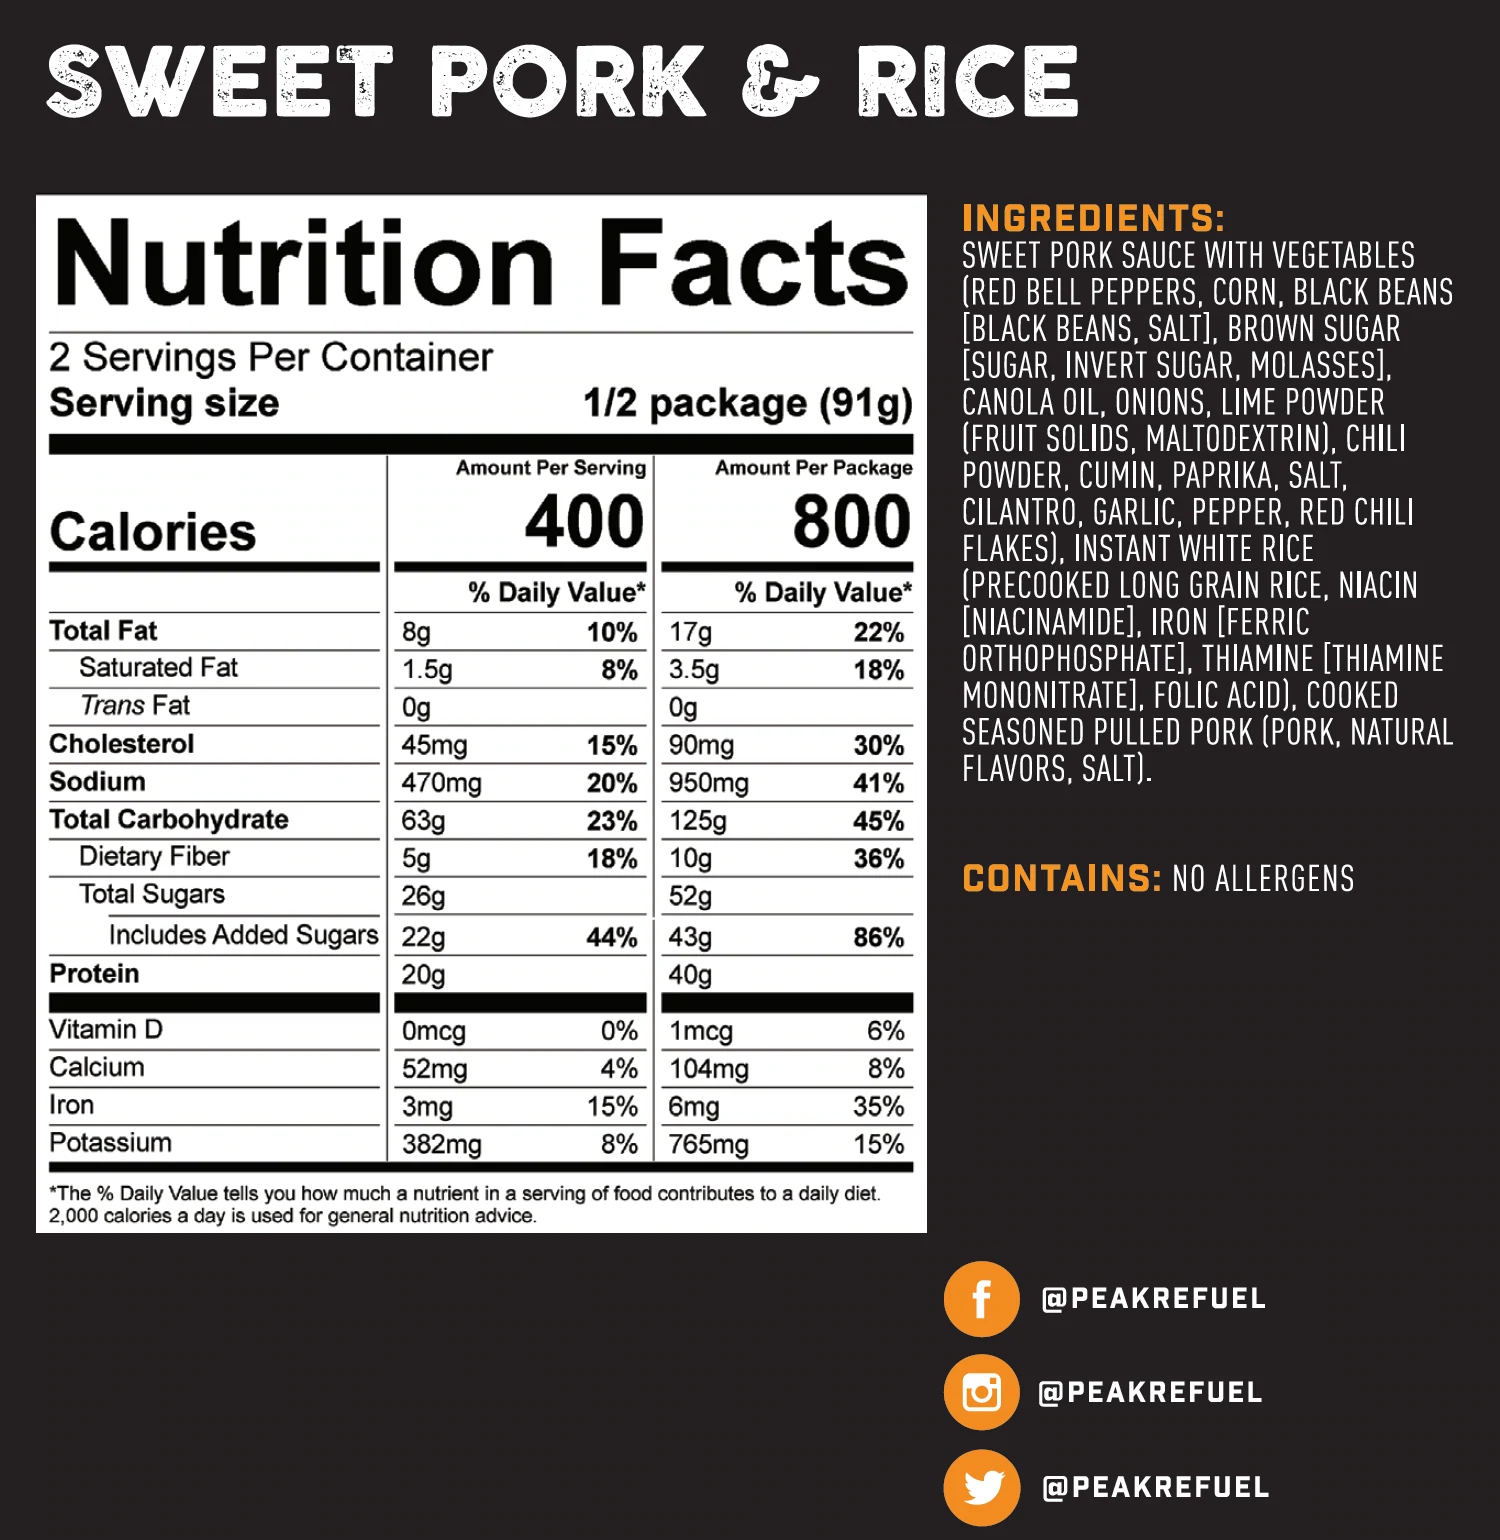 sweet pork protein real all peak refuel less water